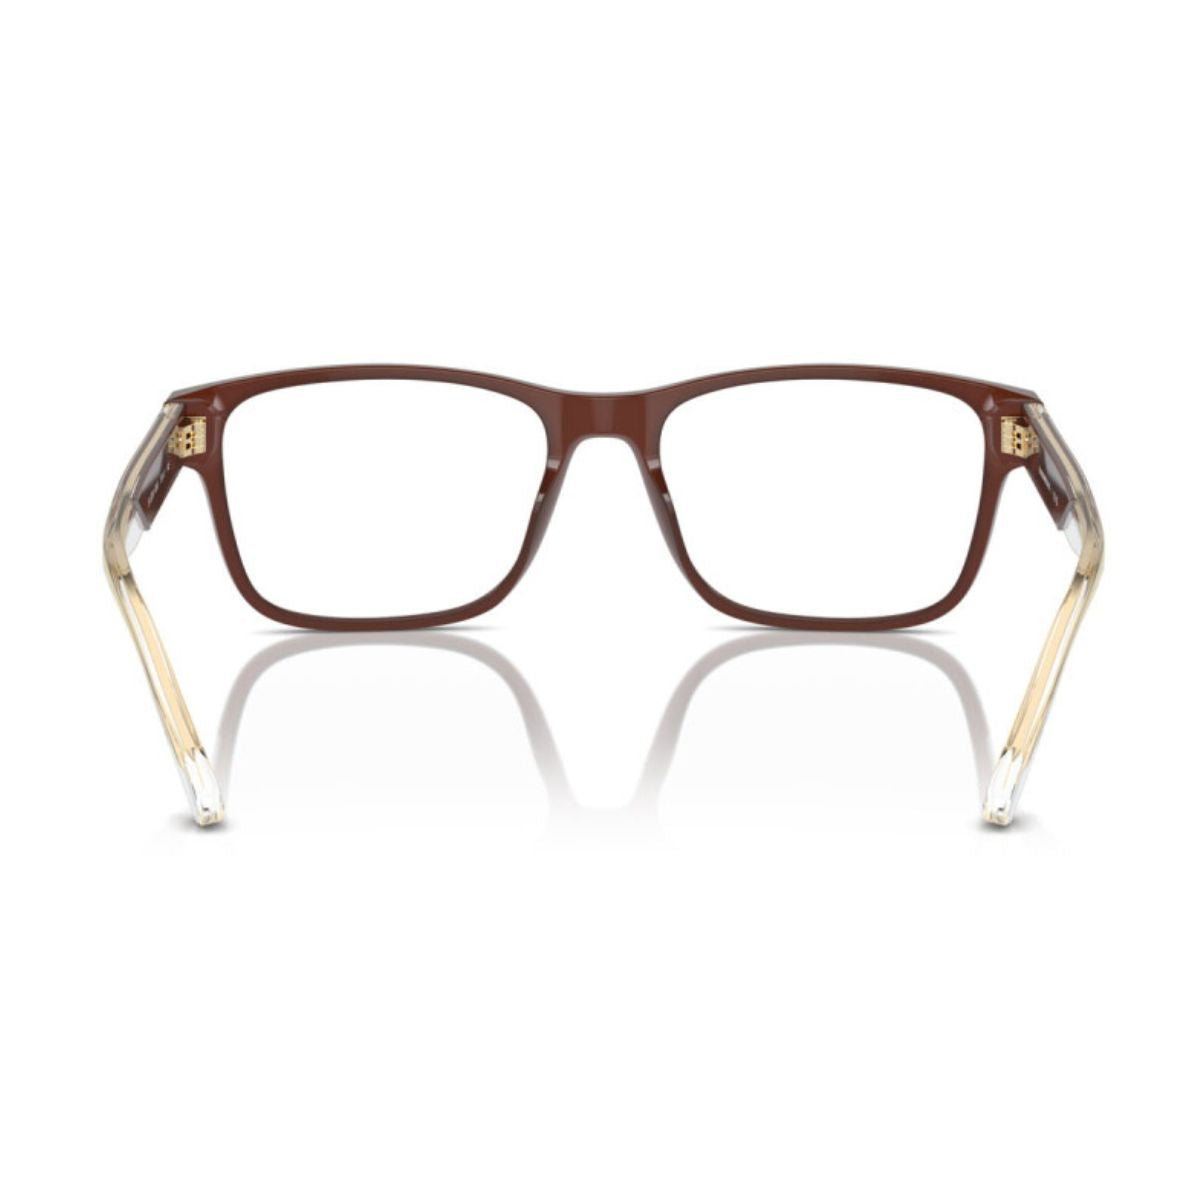 "Best Emporio Armani 3239 6095 Eyeglasses Frame For Men's At Optorium"